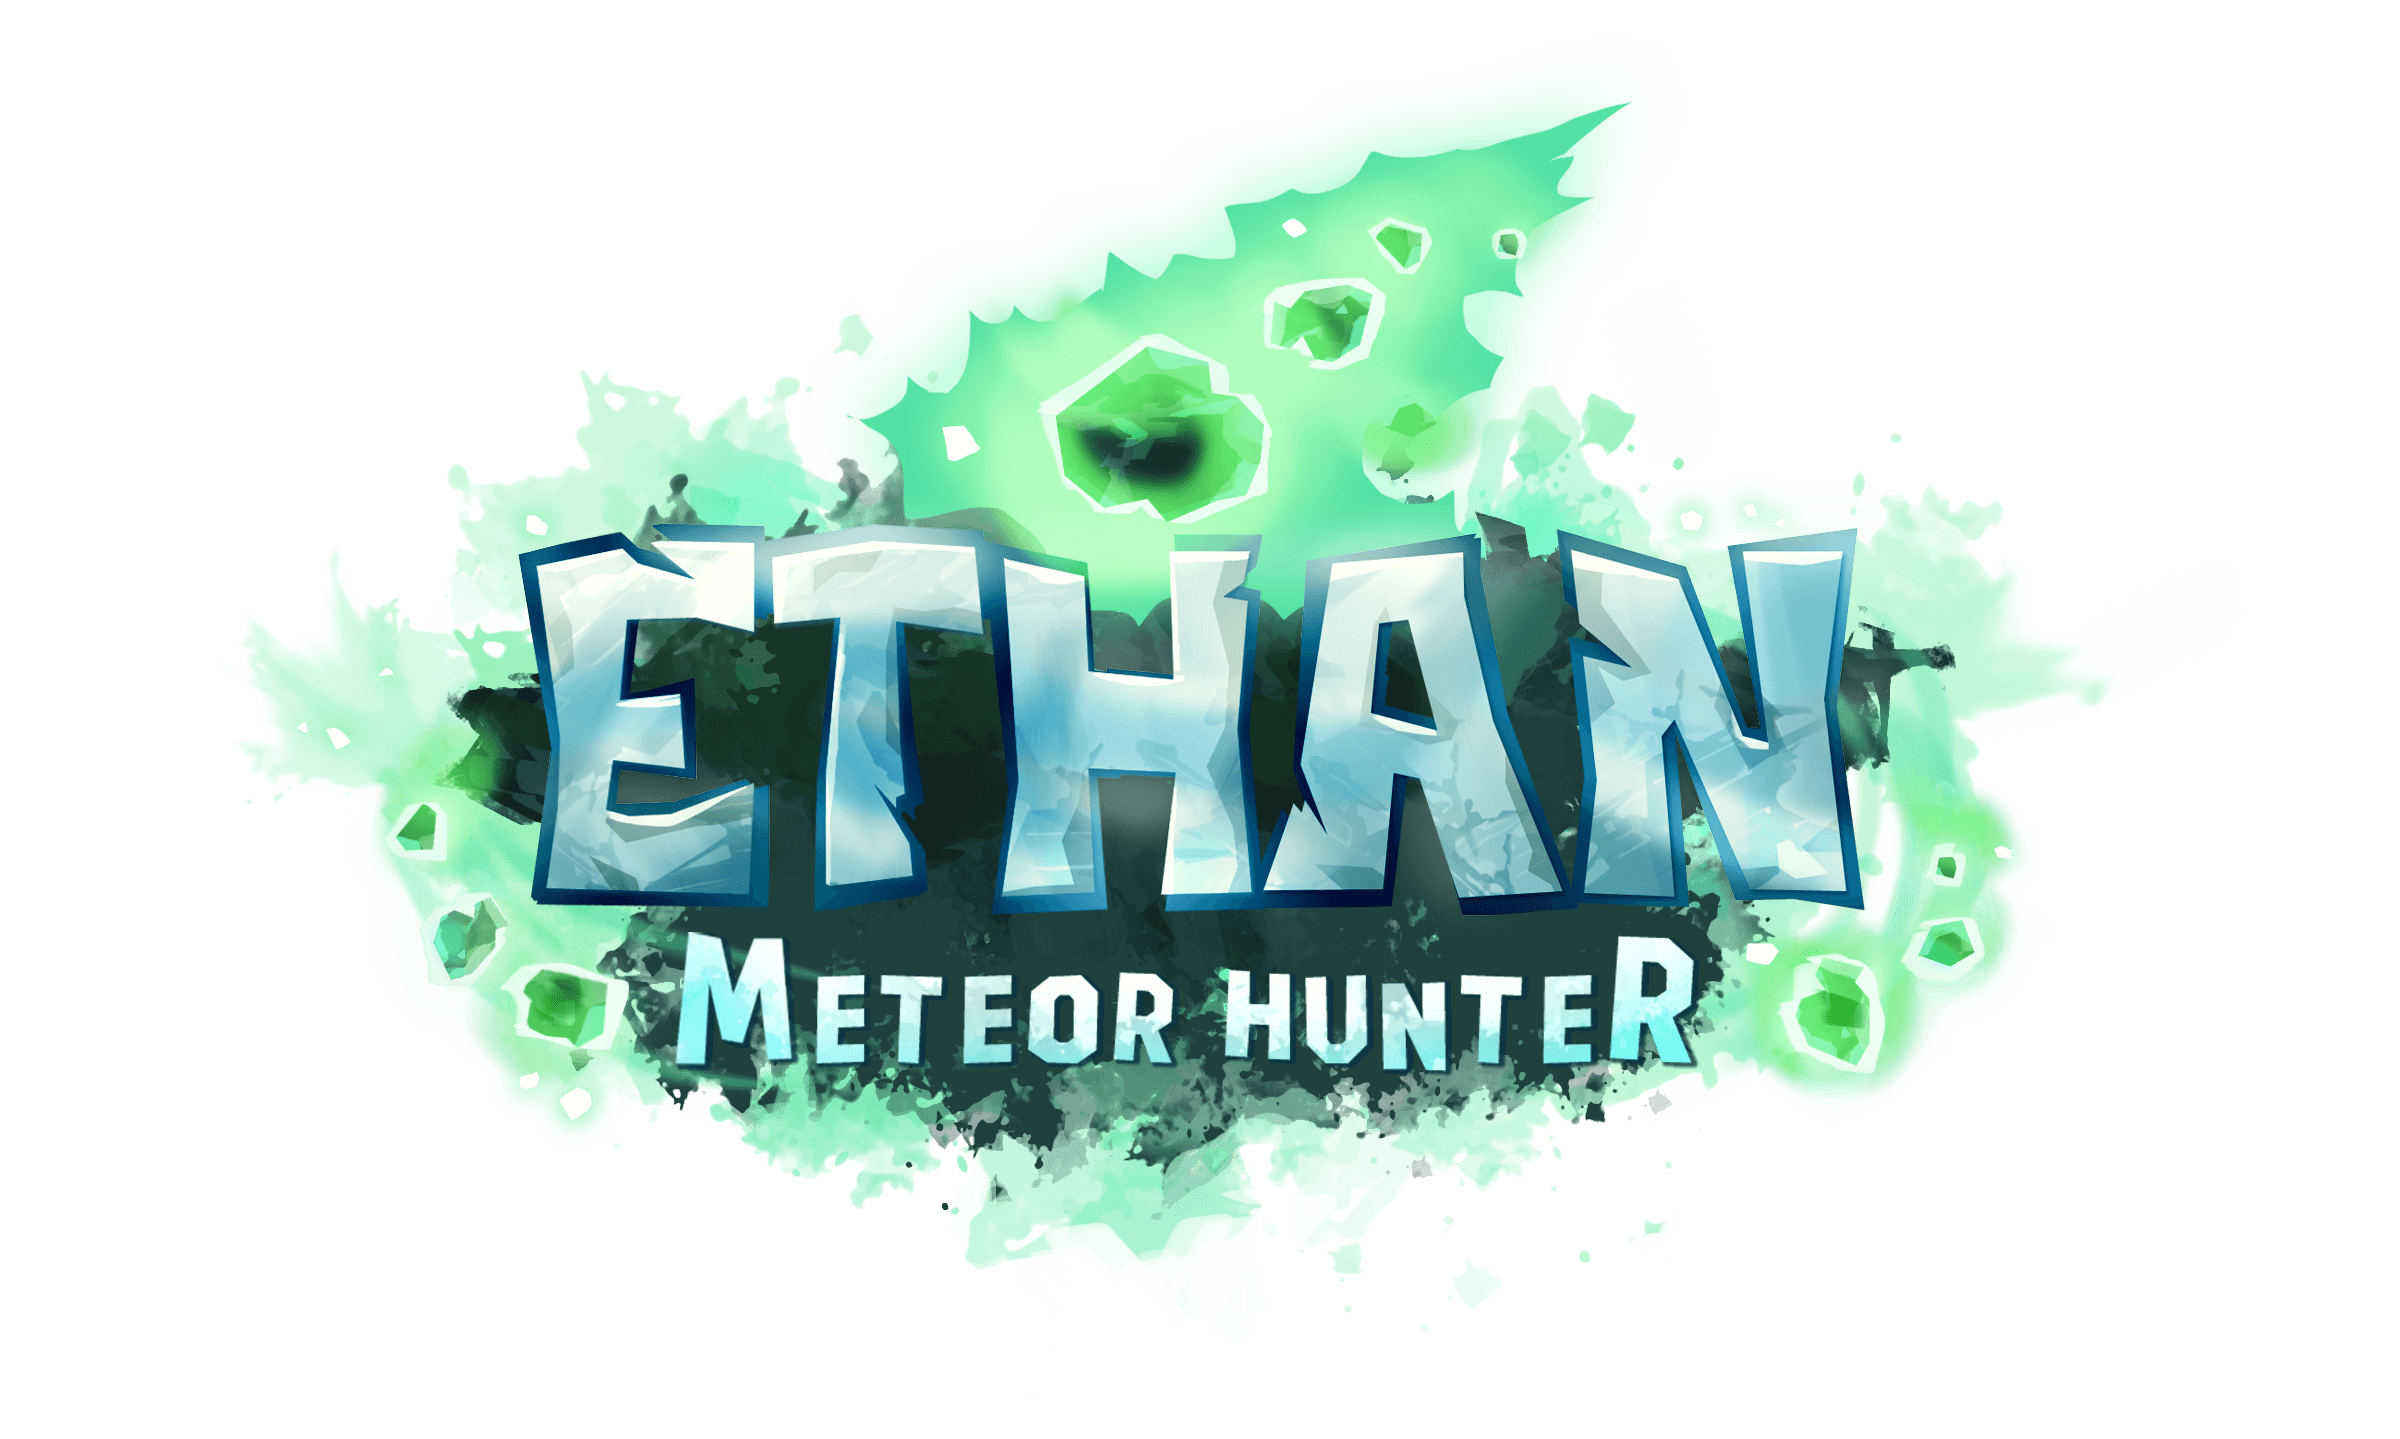 Ethan Logo - Ethan Meteor Hunter logo transparent wallpaper 92